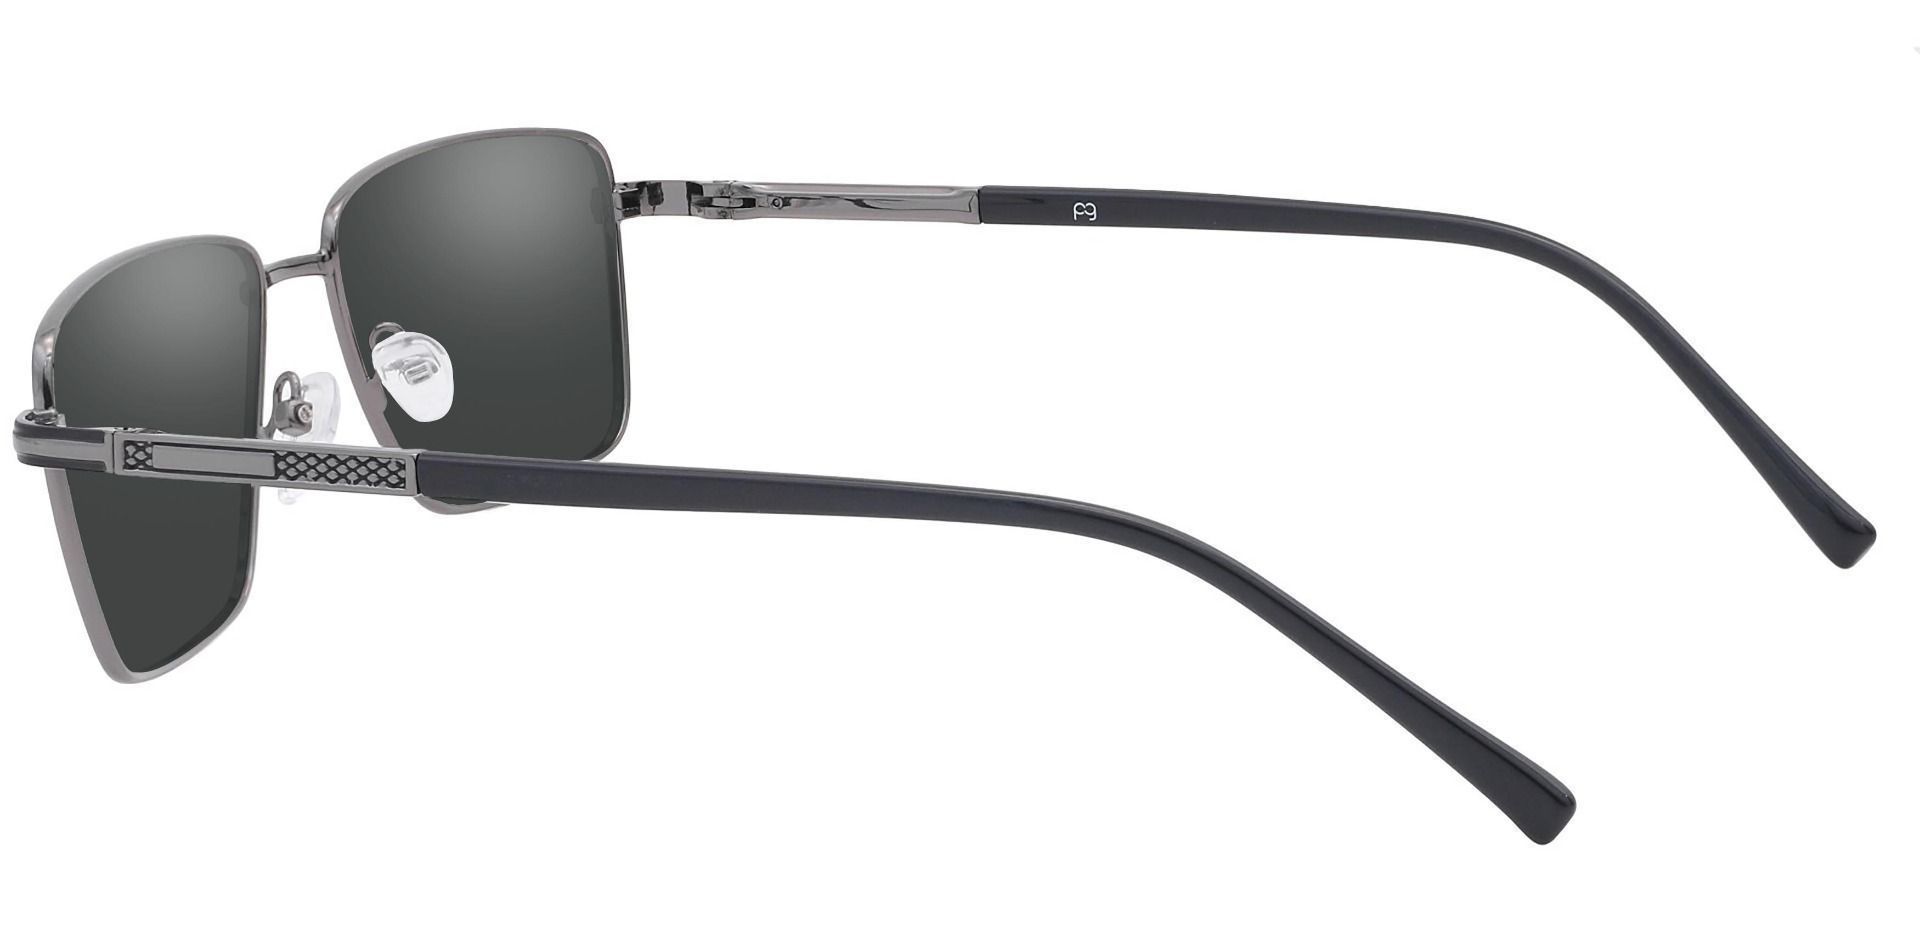 Daniel Rectangle Progressive Sunglasses - Gray Frame With Gray Lenses